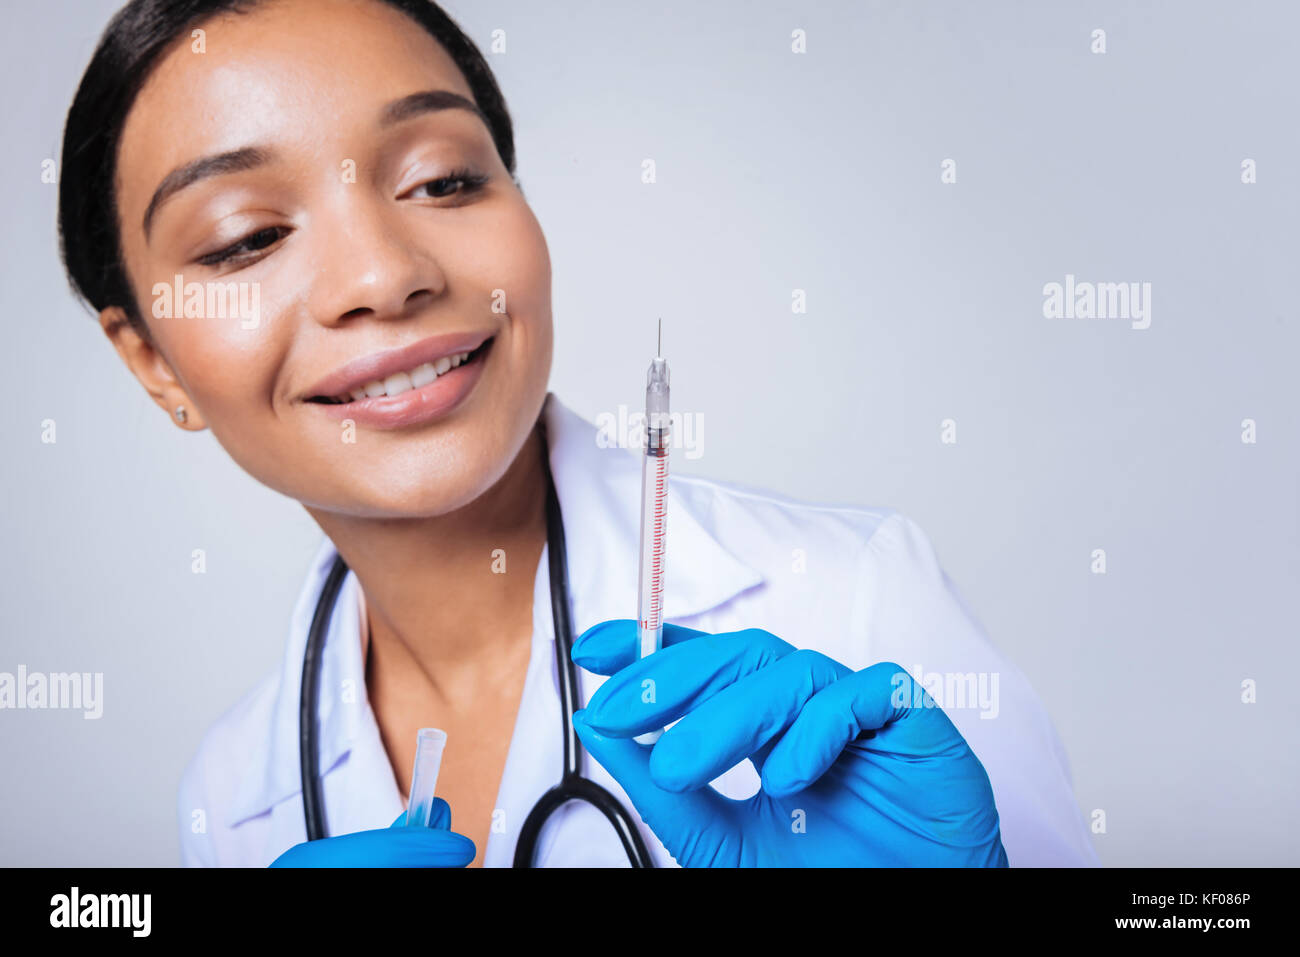 Close up of smiling female doctor holding syringe Banque D'Images